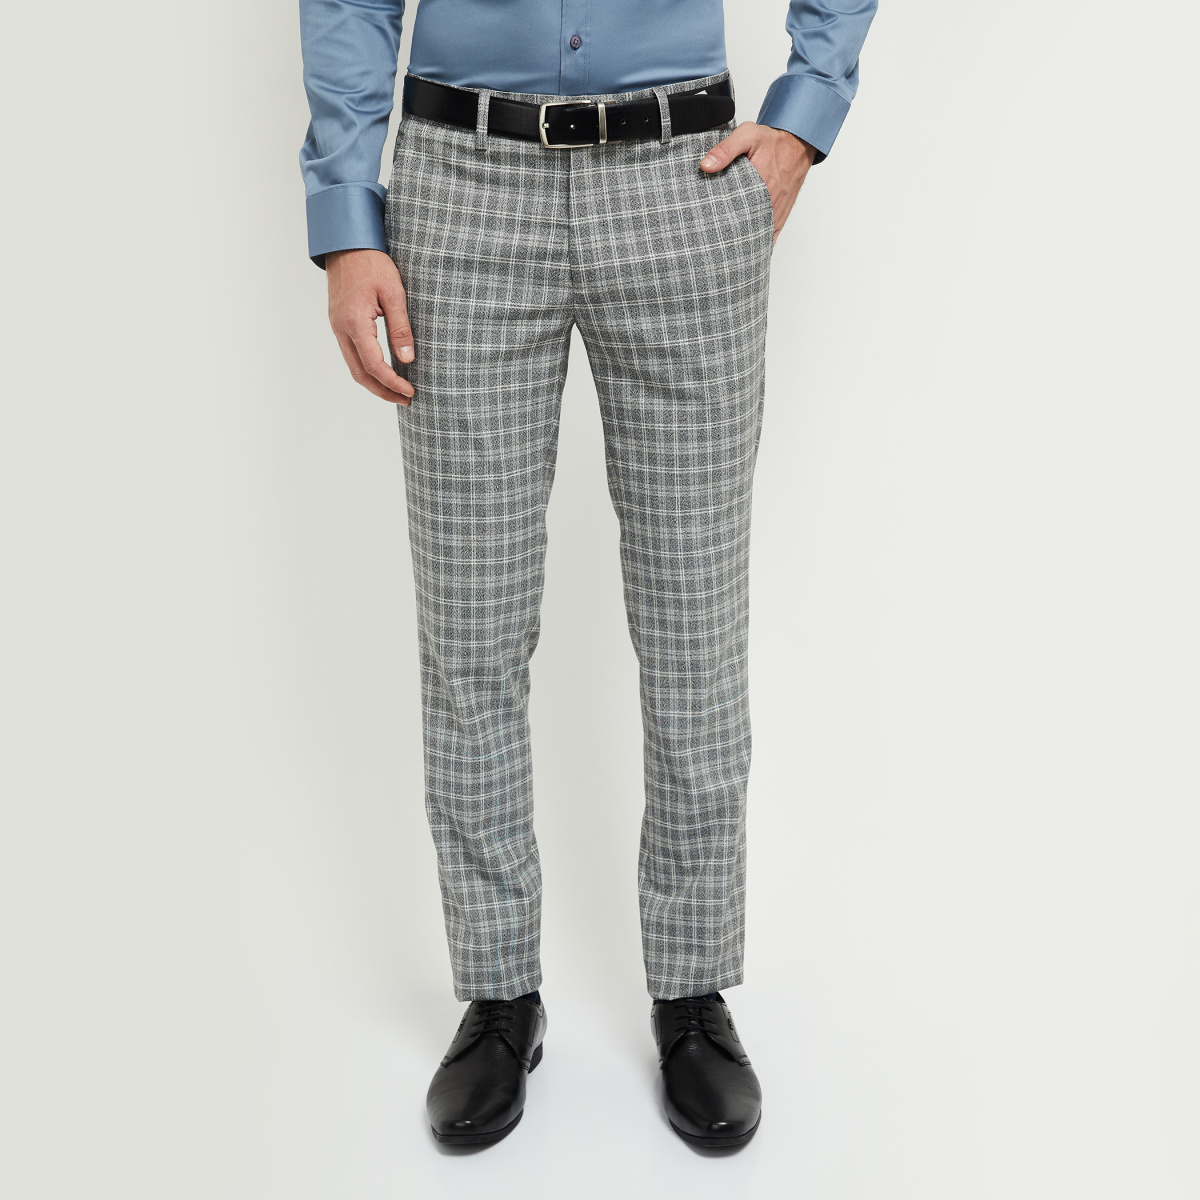 MAX Slim Fit Men Grey Trousers  Buy MAX Slim Fit Men Grey Trousers Online  at Best Prices in India  Flipkartcom